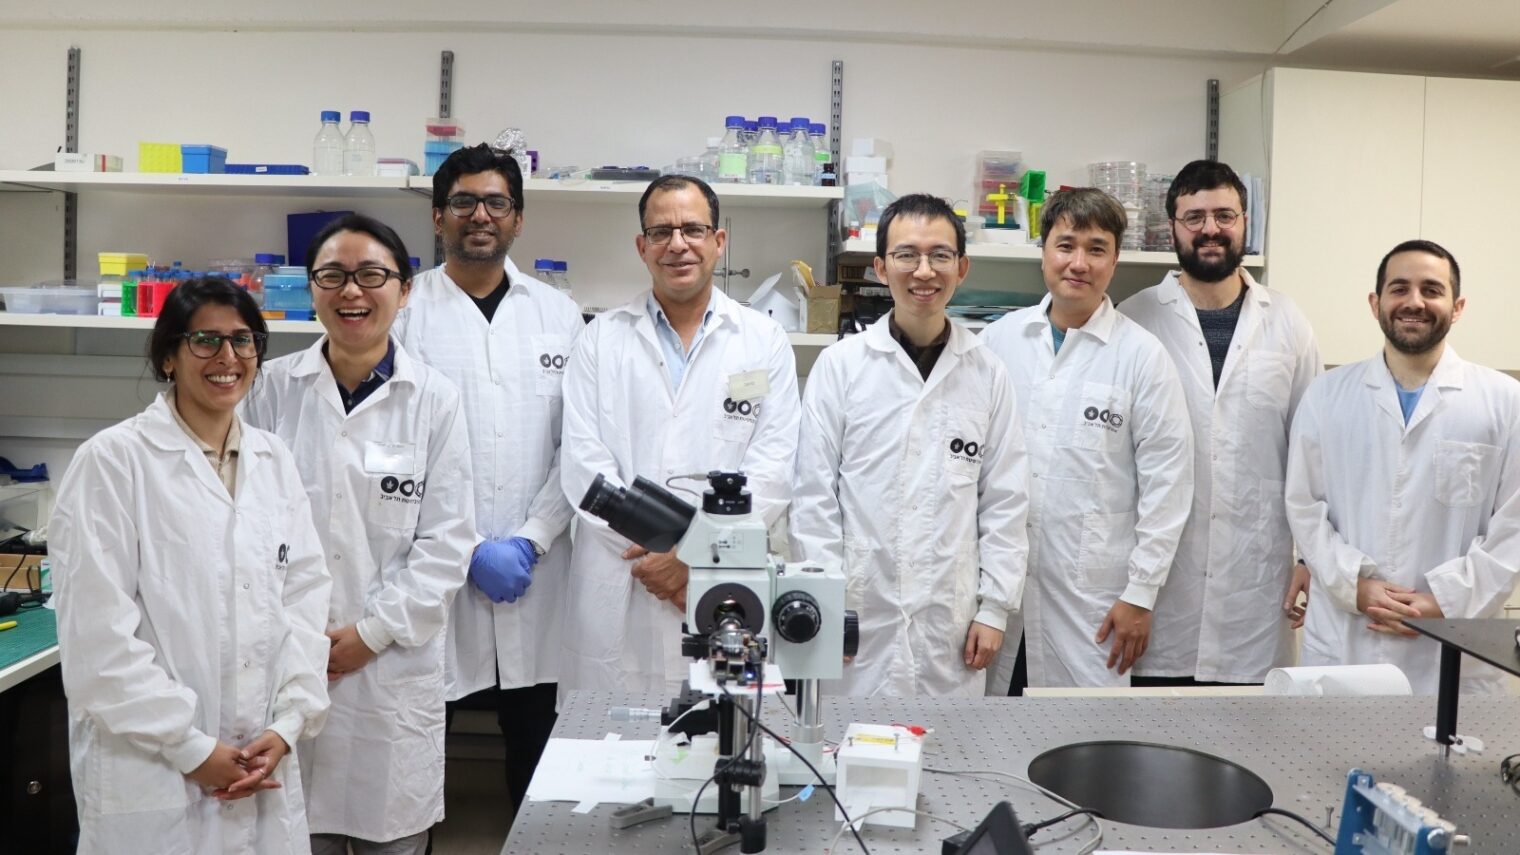 Tel Aviv University research team that developed the micro robot. Photo courtesy of Tel Aviv University